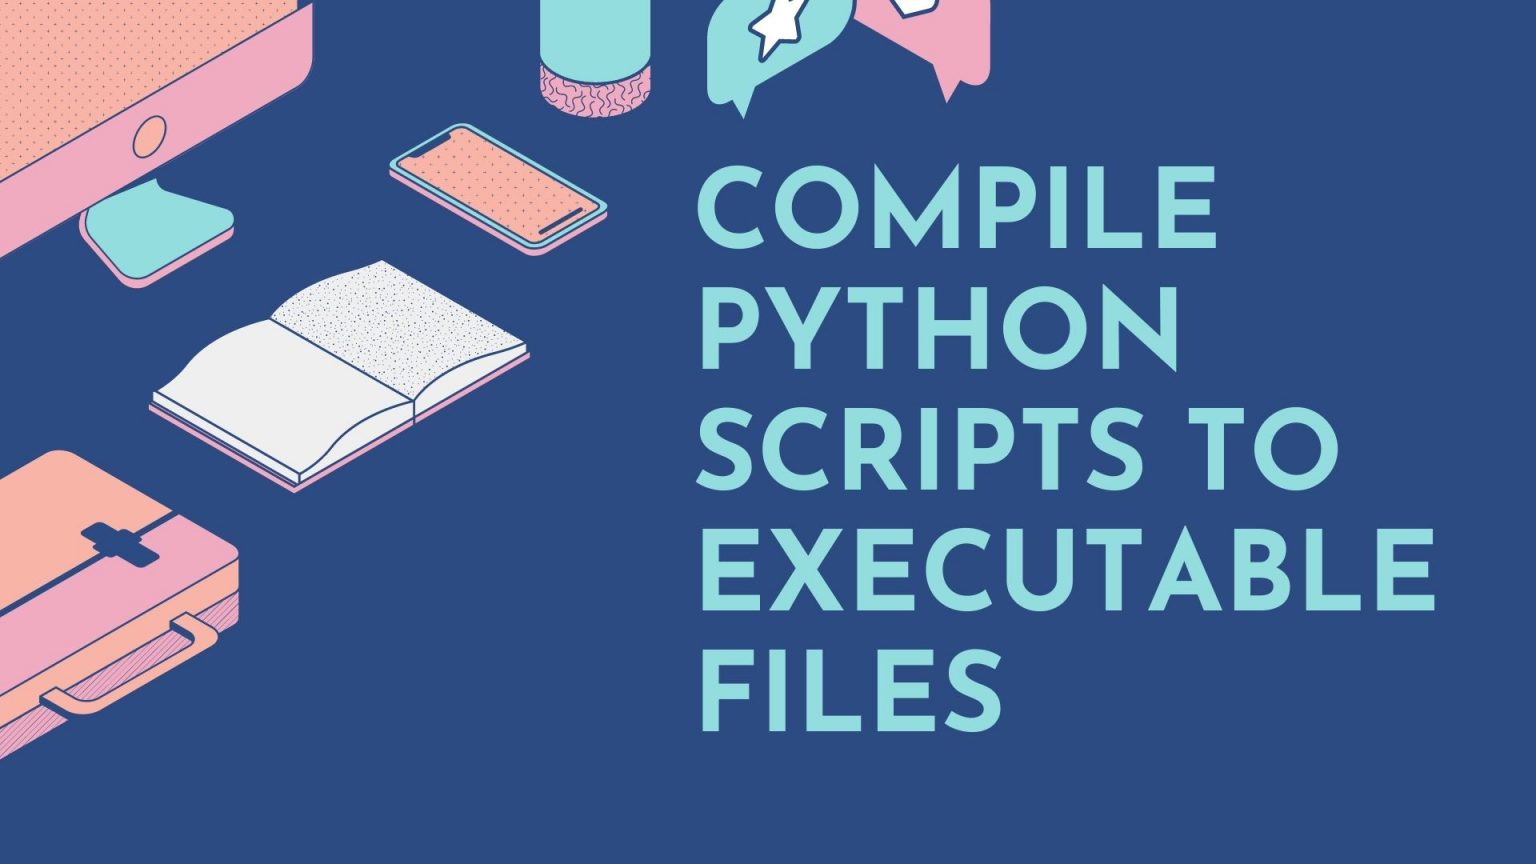 convert python script to exe online